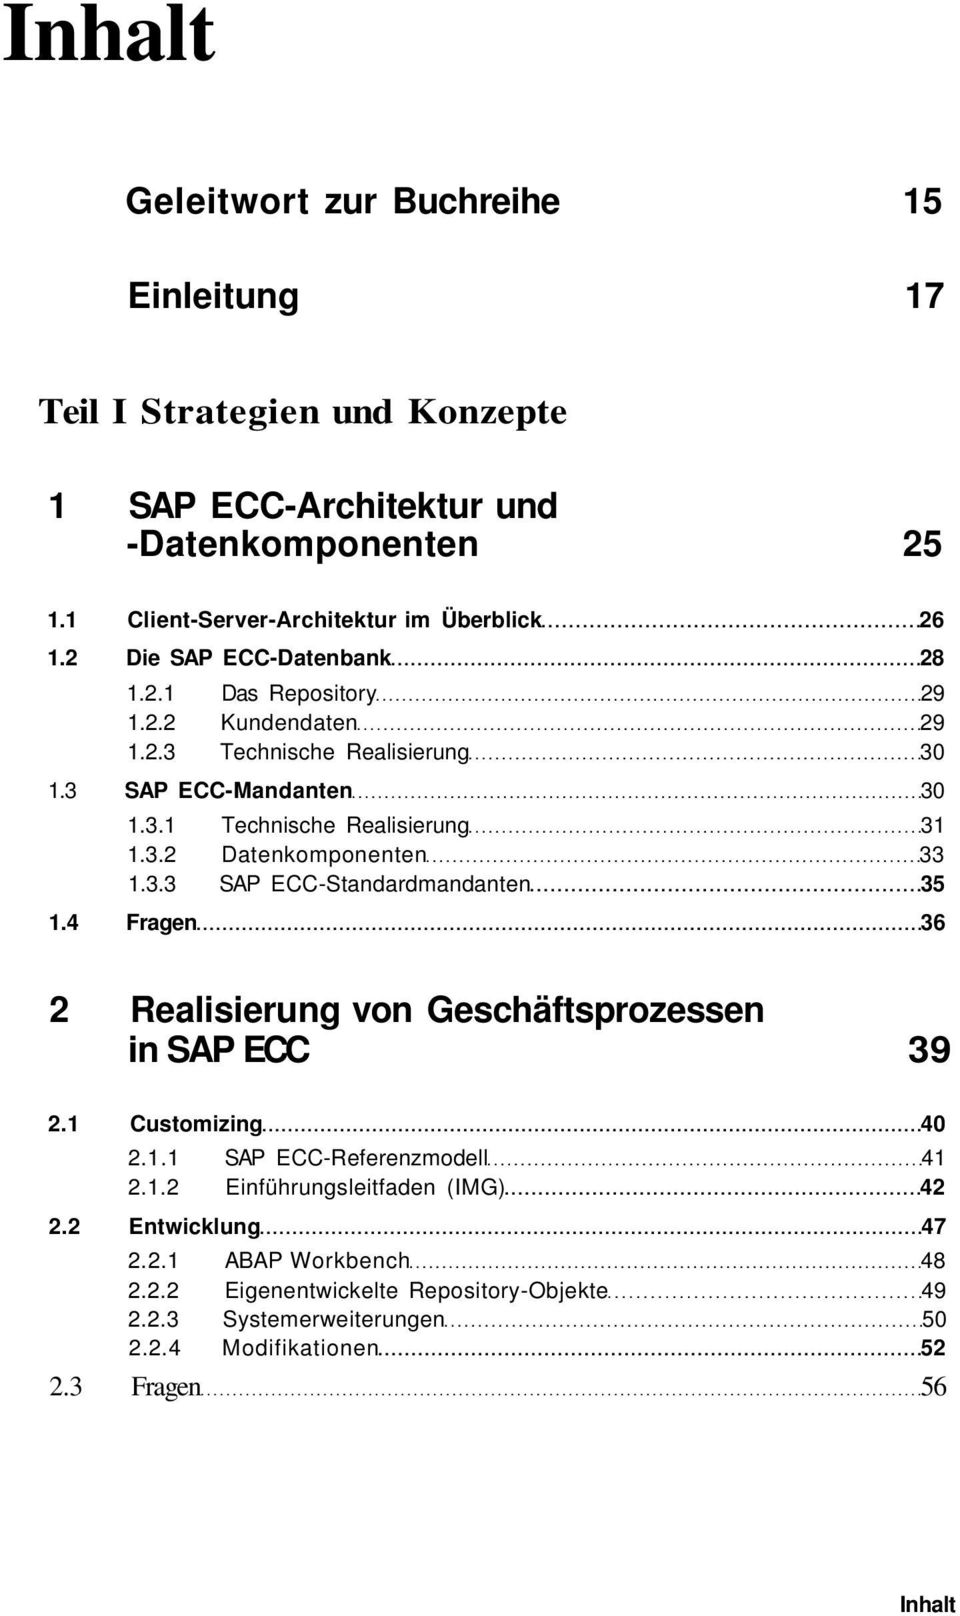 3.3 SAP ECC-Standardmandanten 35 1.4 Fragen 36 2 Realisierung von Geschäftsprozessen in SAP ECC 39 2.1 Customizing 40 2.1.1 SAP ECC-Referenzmodell 41 2.1.2 Einführungsleitfaden (IMG) 42 2.